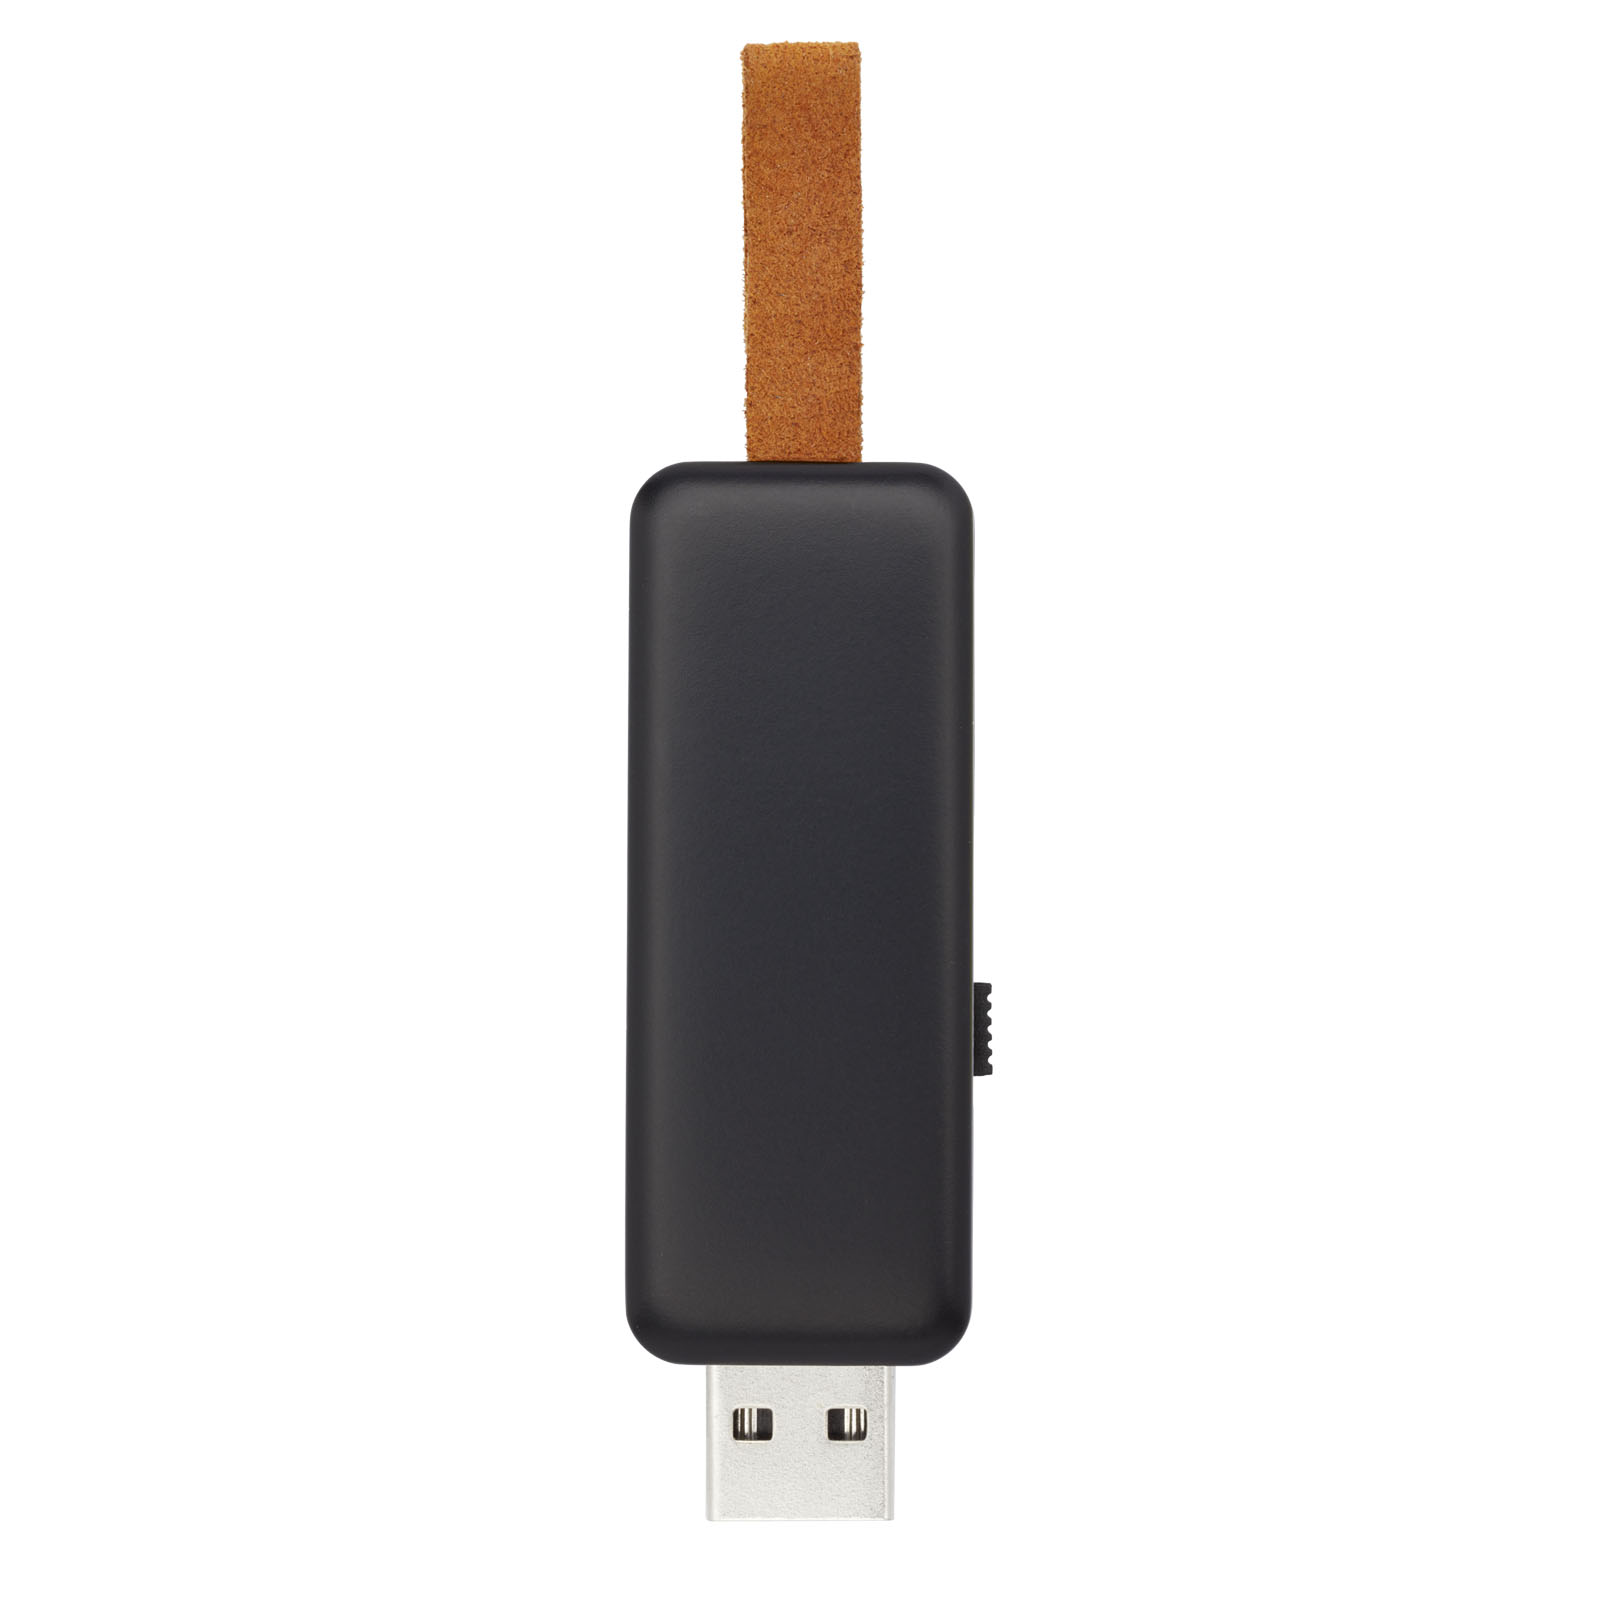 Clés USB publicitaires - Clé USB lumineuse Gleam 8 Go - 1